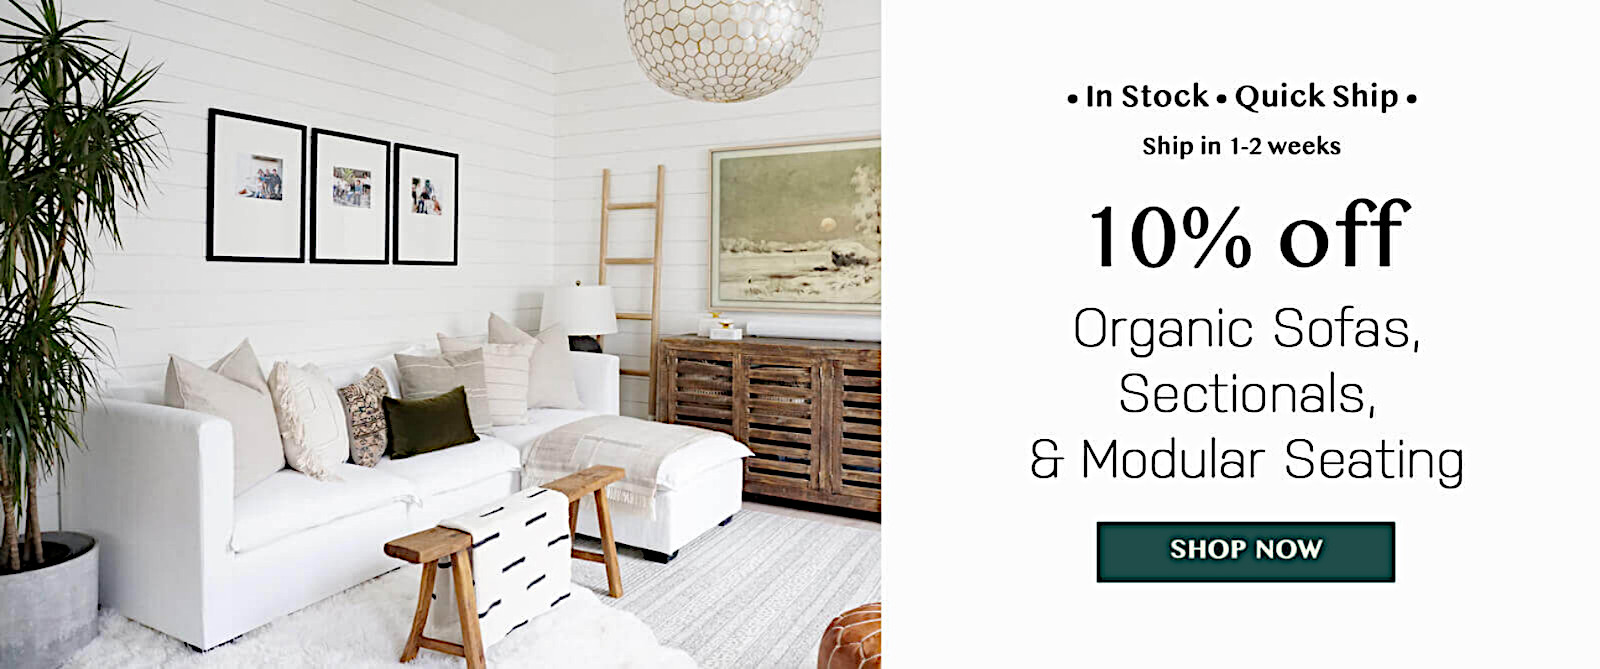 Closeout Price organic sofas sectionals modular seating